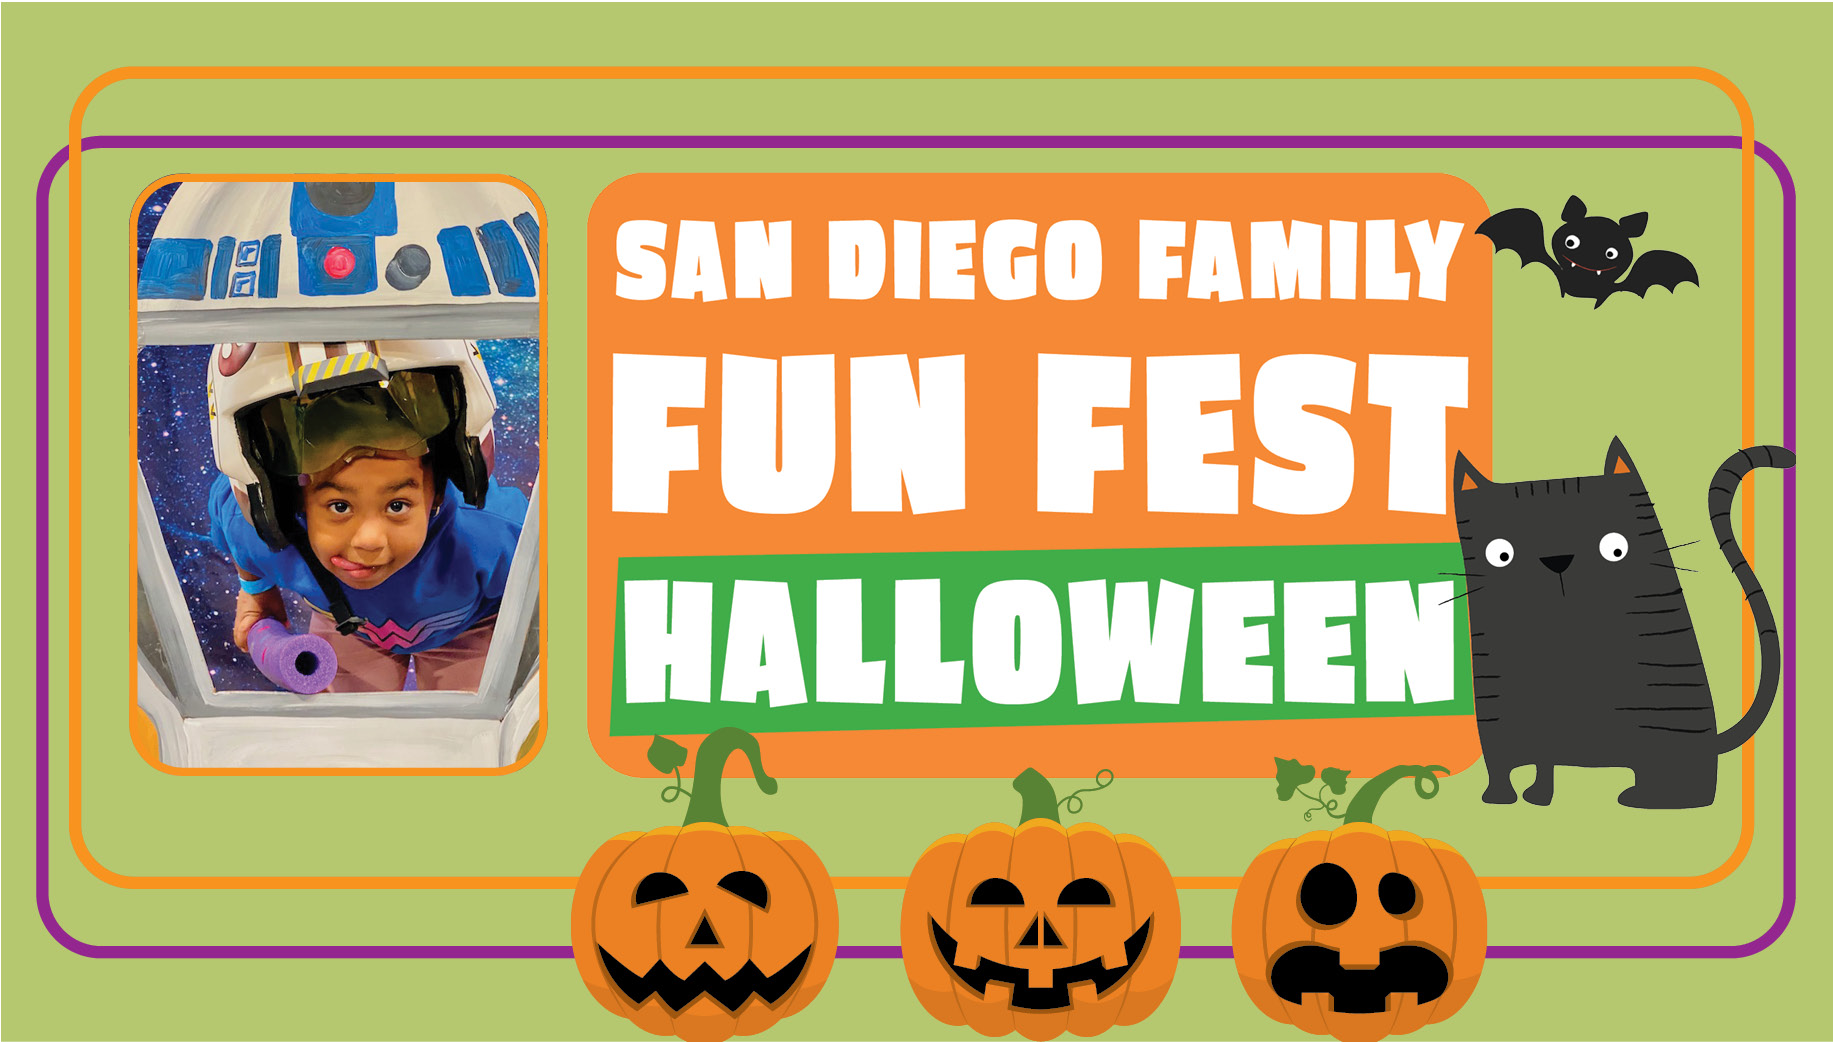 San Diego Family Fun Fest Halloween